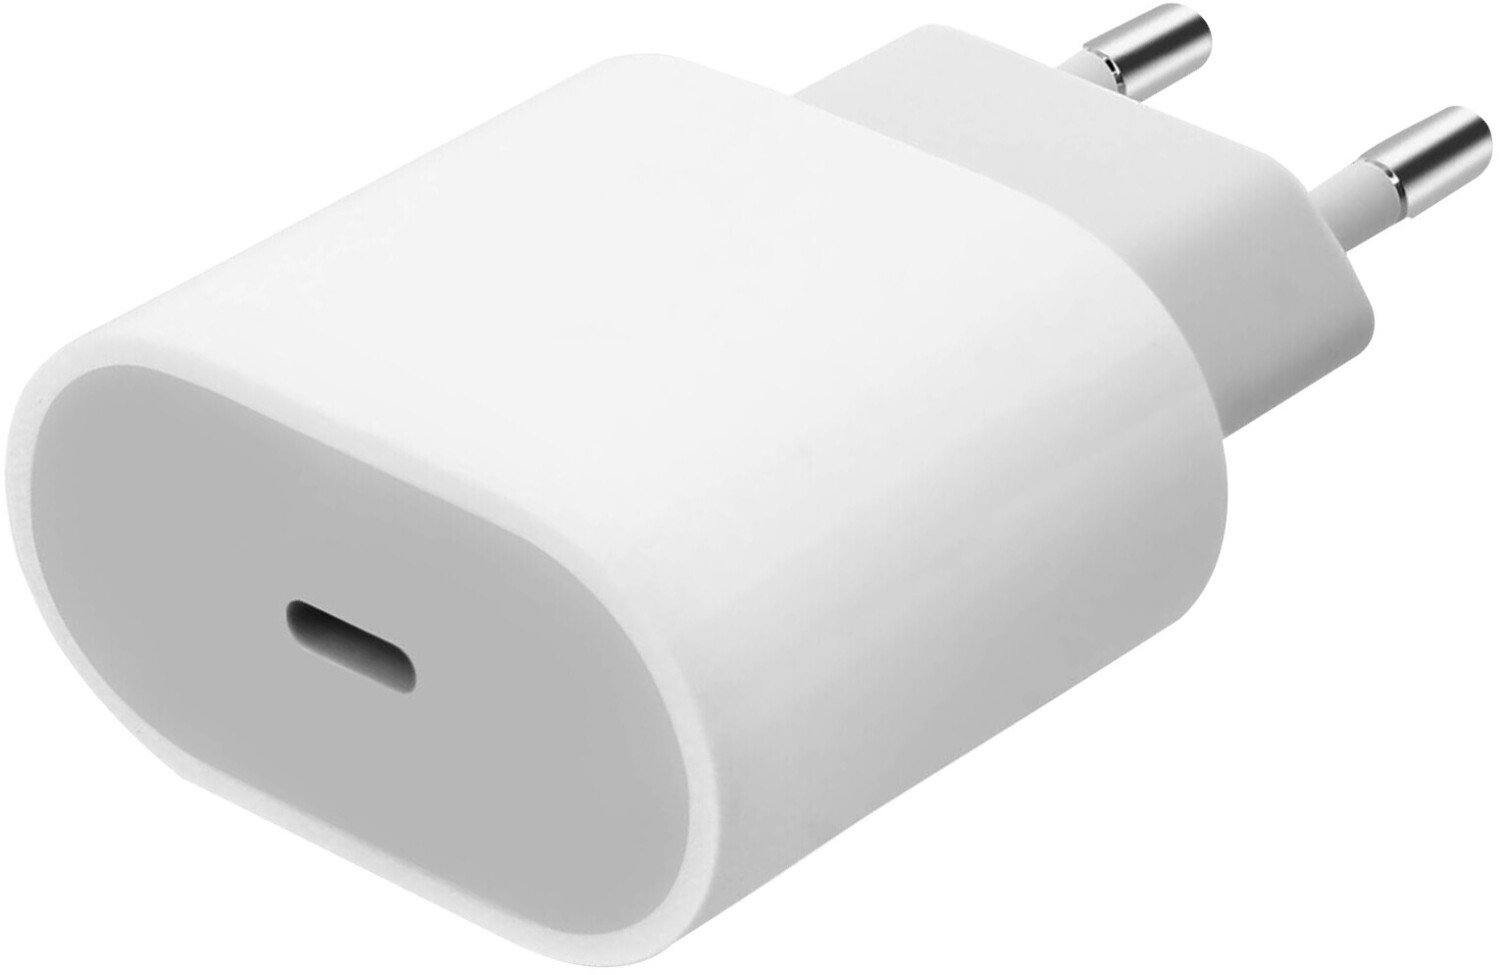 Адаптер apple usb c 20вт. Apple USB-C 20w Power Adapter. СЗУ Apple mhje3zm/a 20w, USB, тype-c Power Adapter (белый). Mhje3zm/a 20w USB-C Power Adapter. Apple Adapter 20w.